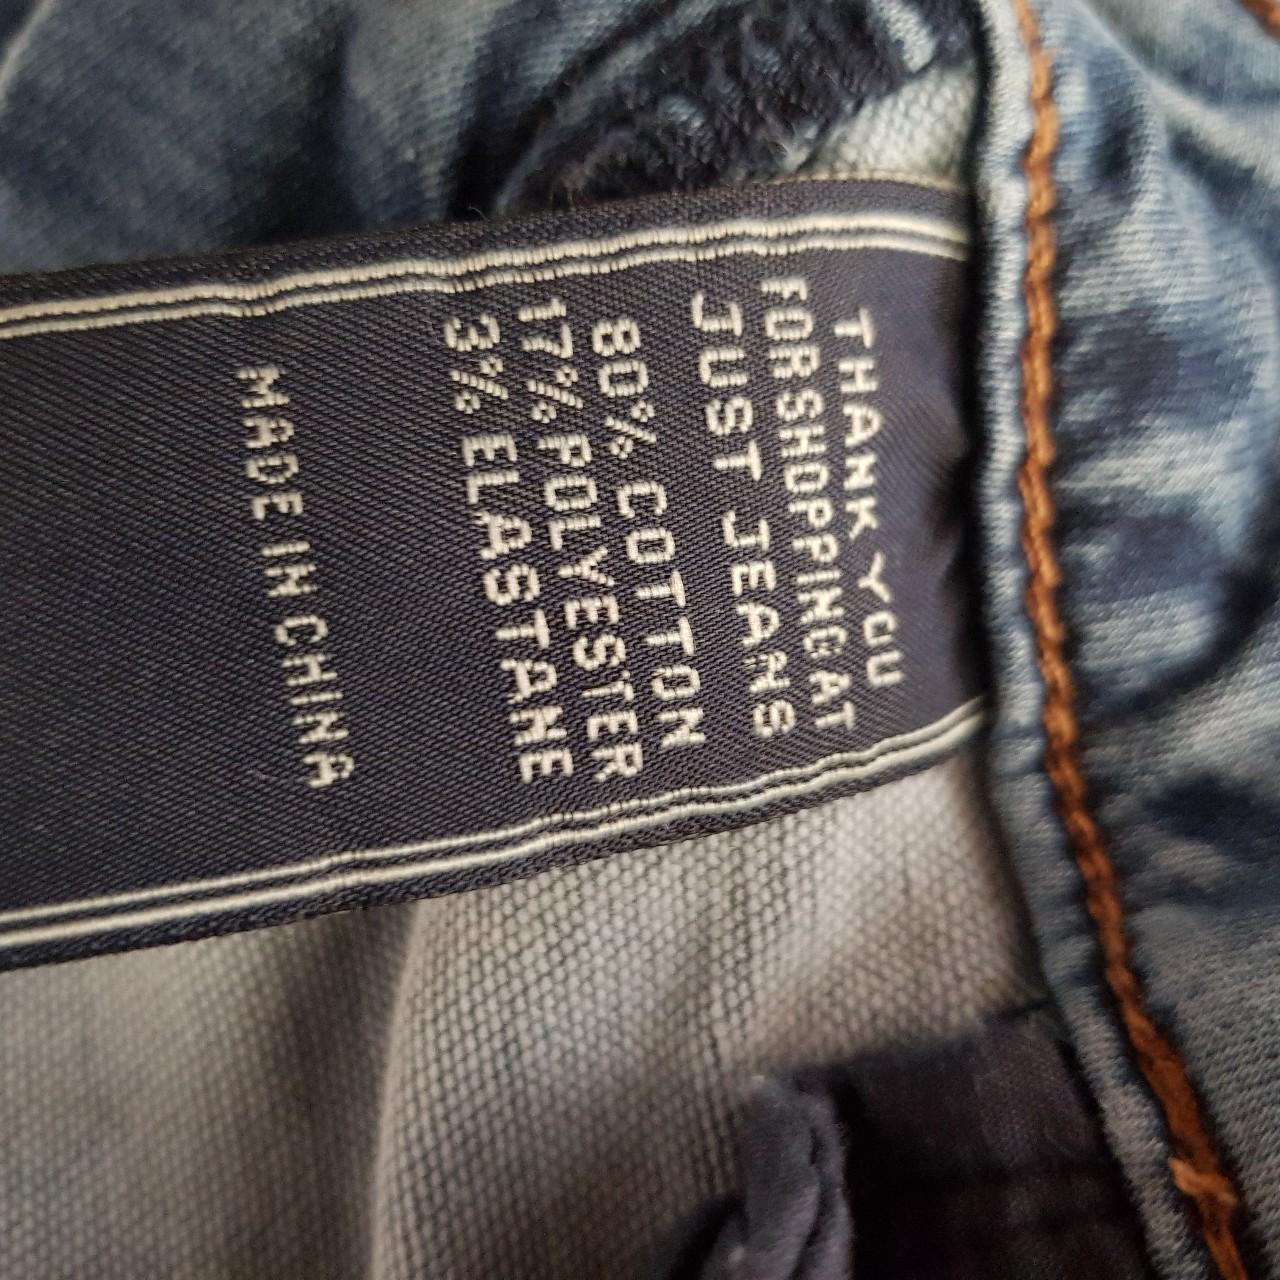 JUST JEANS Denim Amaze Jeans Very soft, comfy,... - Depop